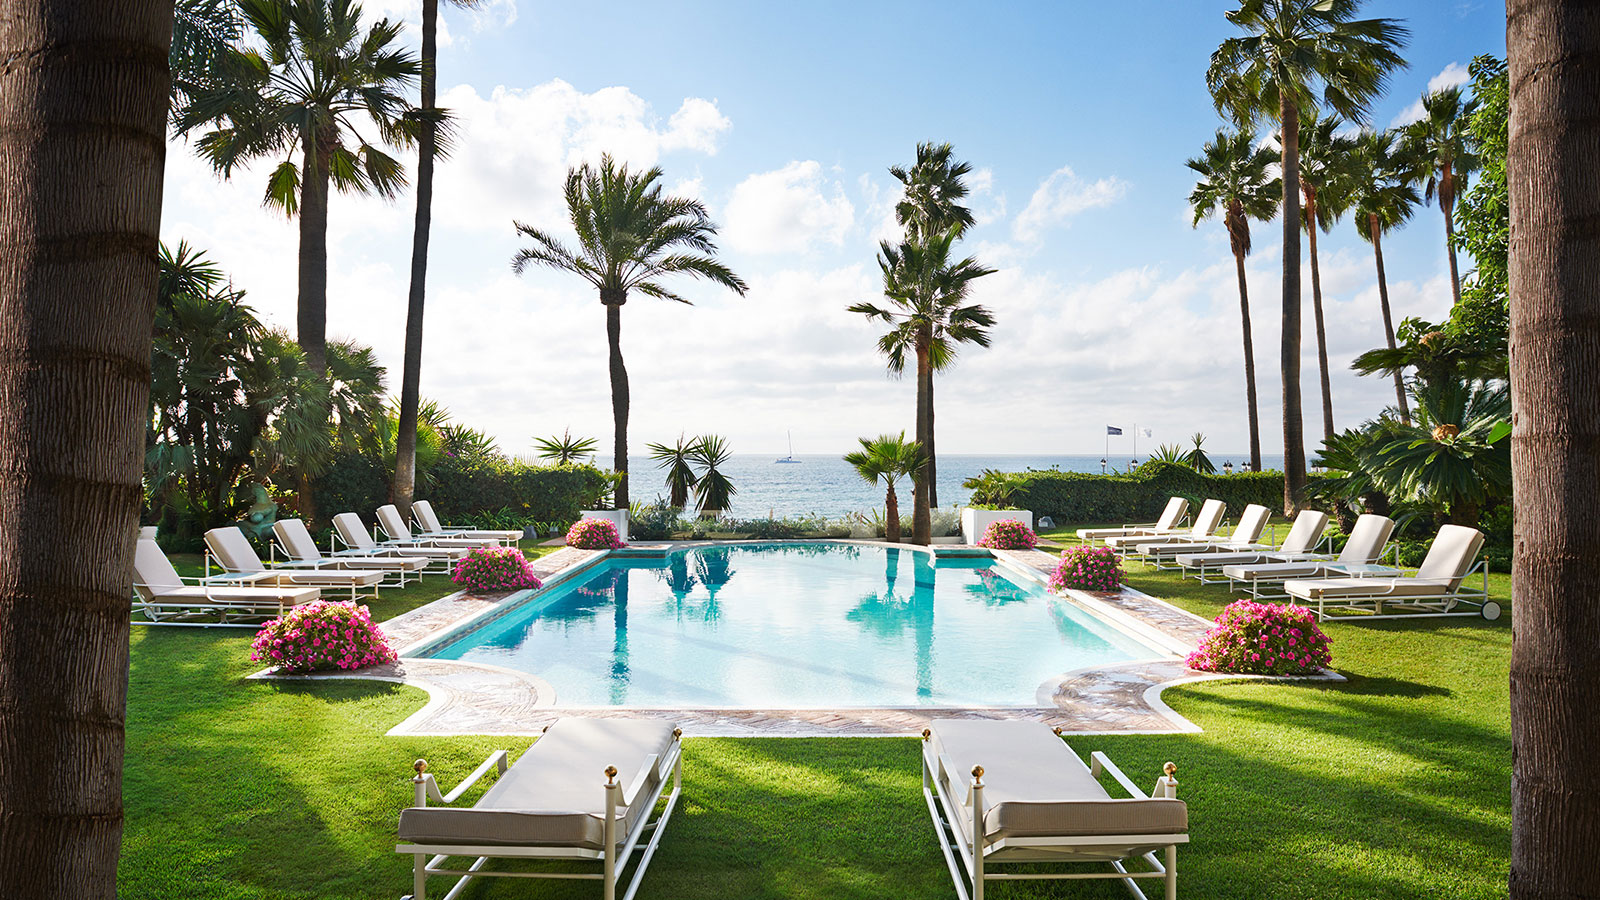 Hotel Review: The Marbella Club, Marbella, Spain